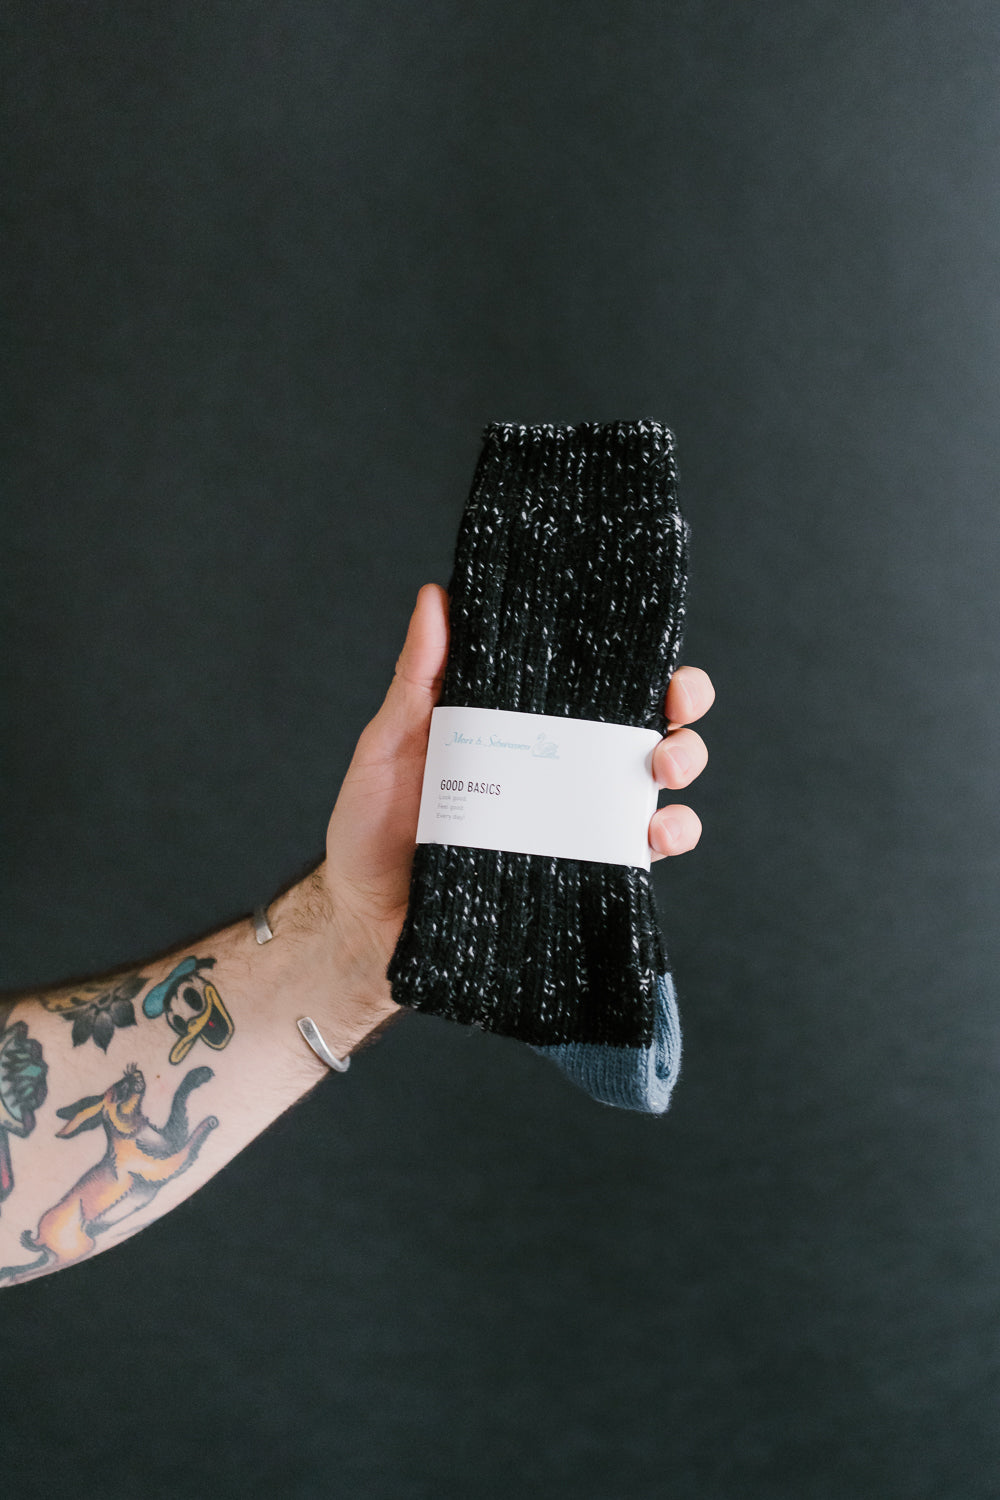 Wool stockings Le Sensible – Artisans Canada